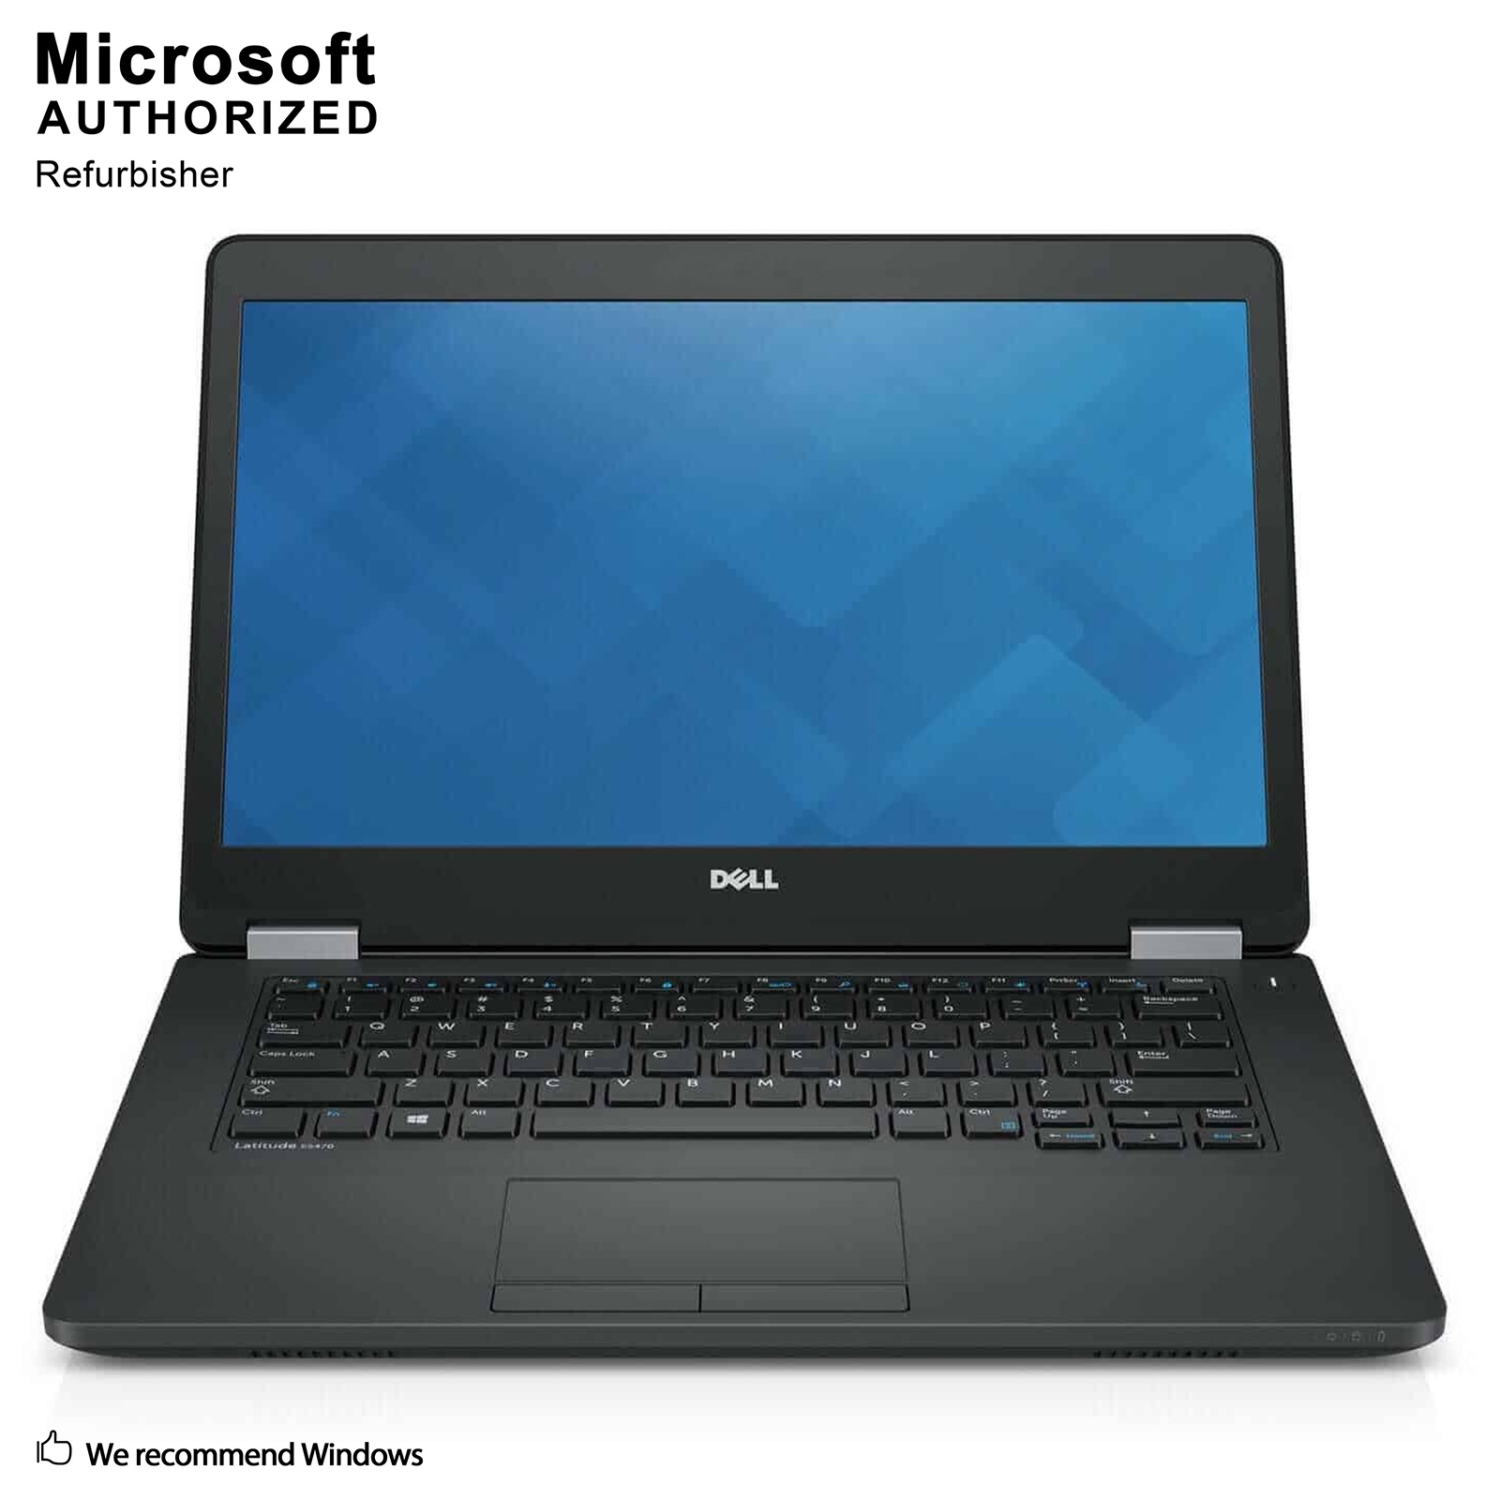 Refurbished (Excellent) - Dell Latitude E5470 14" Laptop, Intel Core i3 6100U 2.3G, 8G DDR4, 256G SSD, VGA, HDMI, USB 3.0, W10P64 (EN/FR/ES)